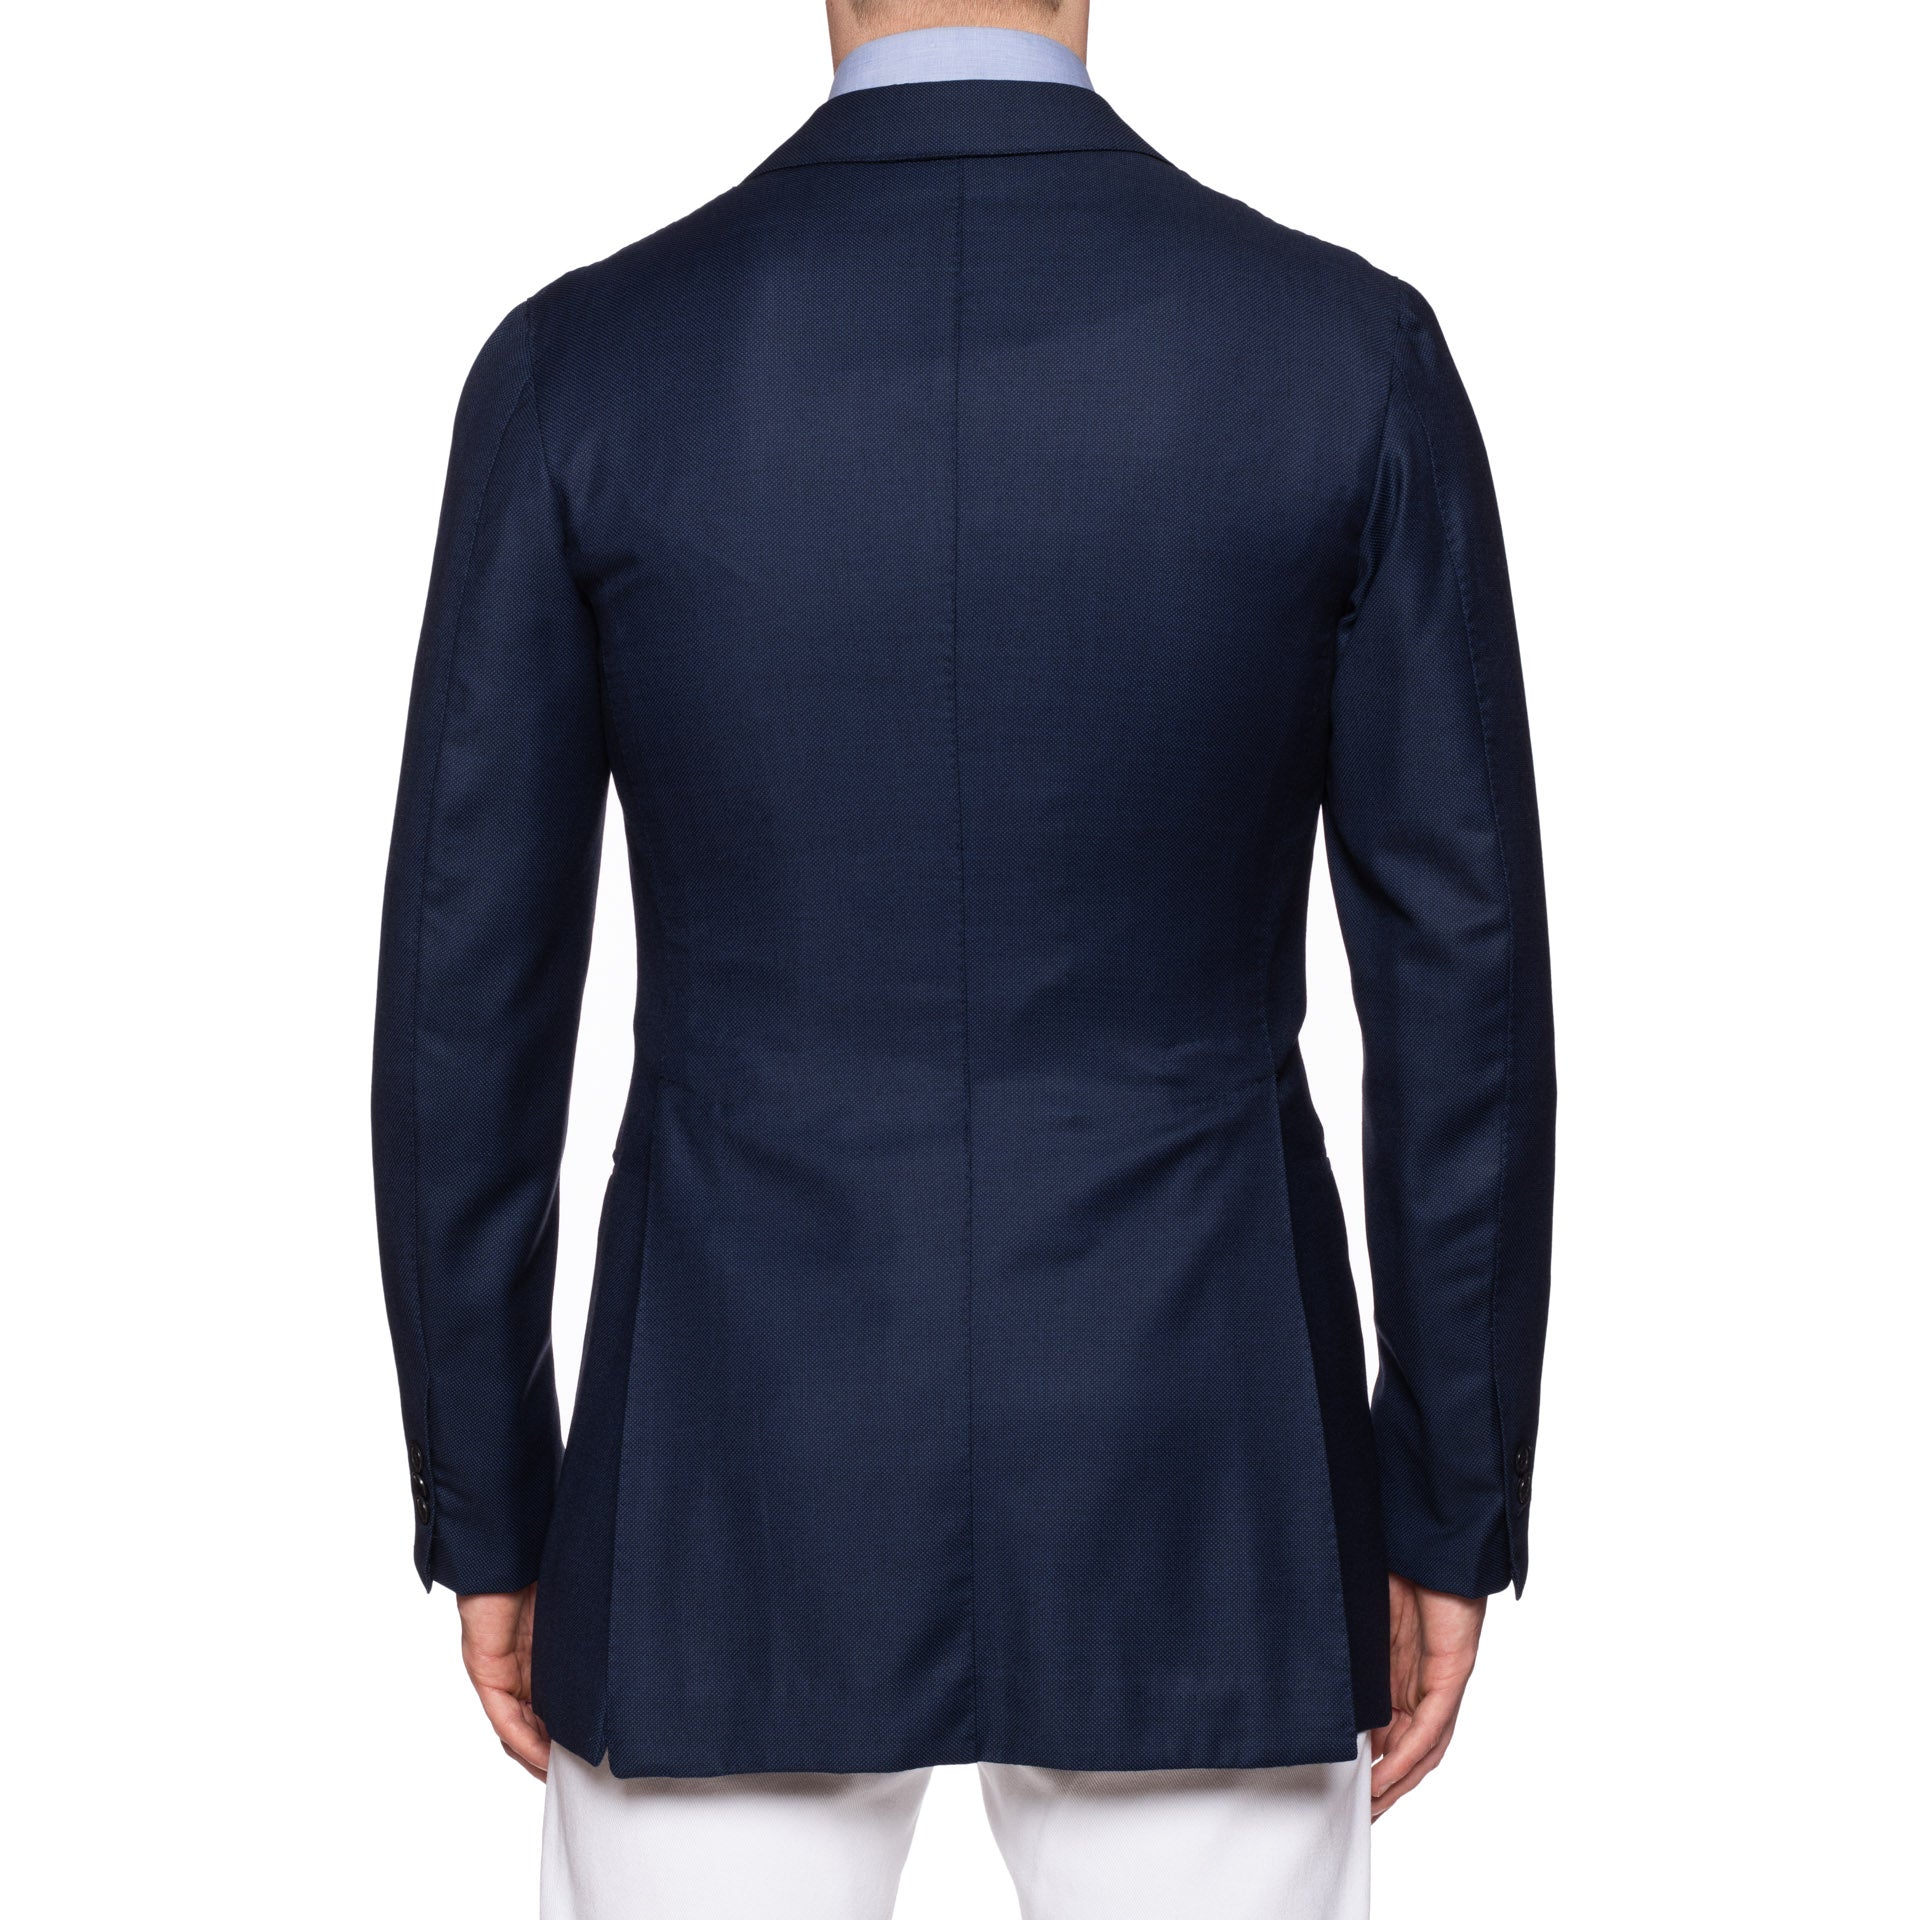 SARTORIA CHIAIA Bespoke Blue CERRUTI Wool Super 130's Jacket EU 46 US 36 Long